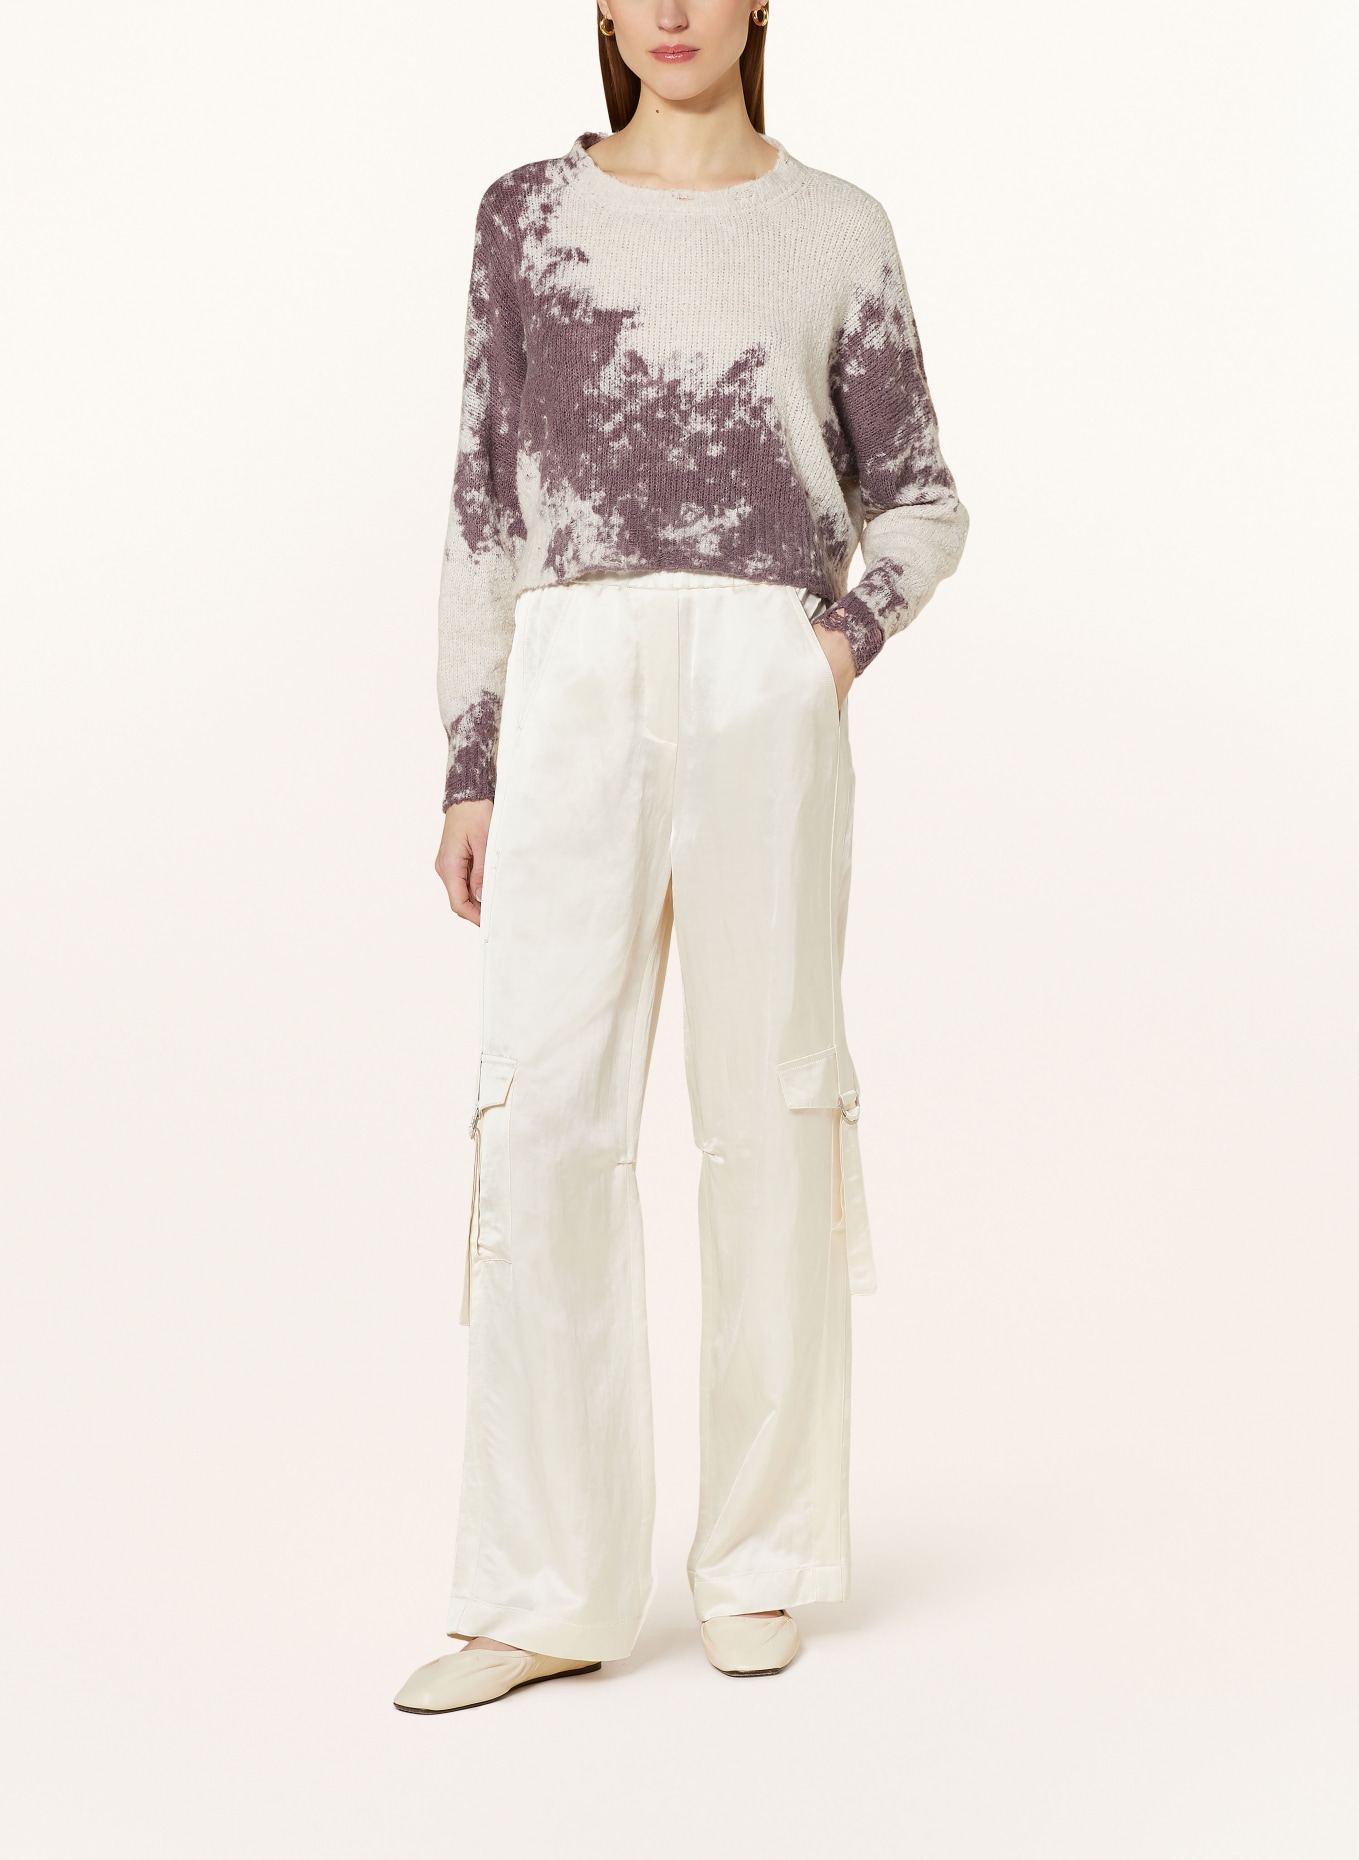 AVANT TOI Cropped-Pullover, Farbe: 18 lavender  grau lavendel (Bild 2)